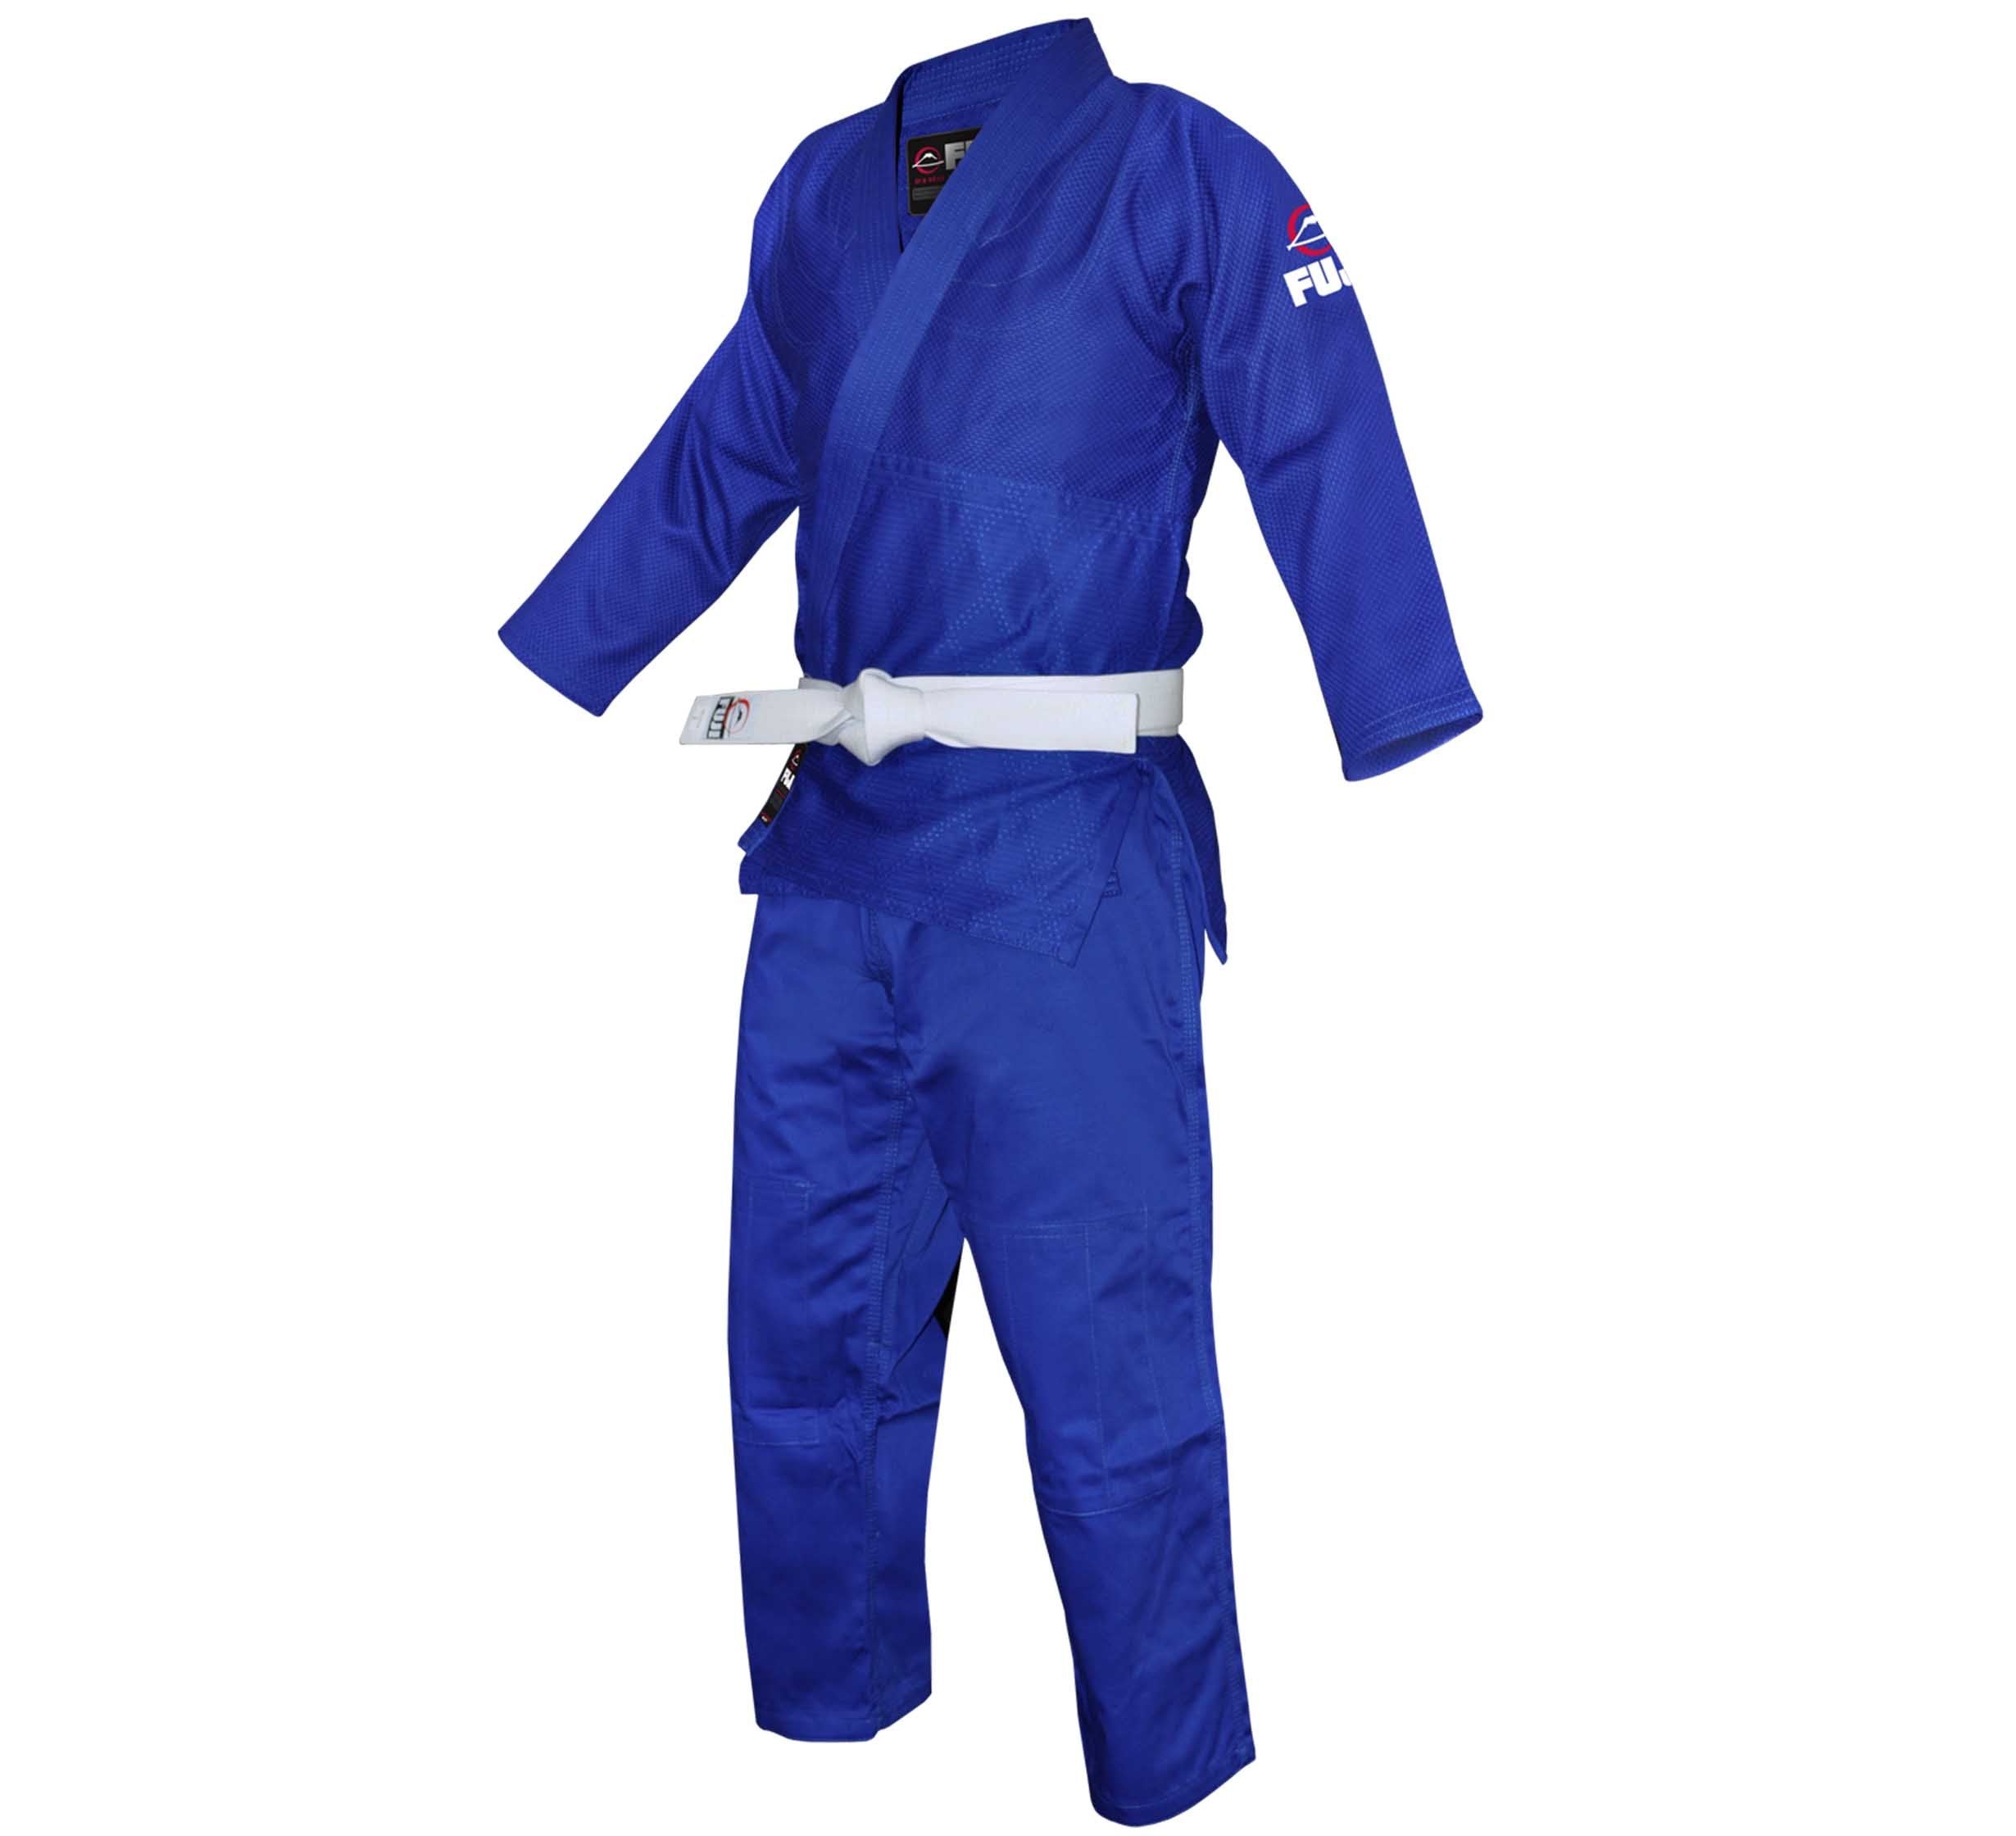 USA Judo Spats Blue